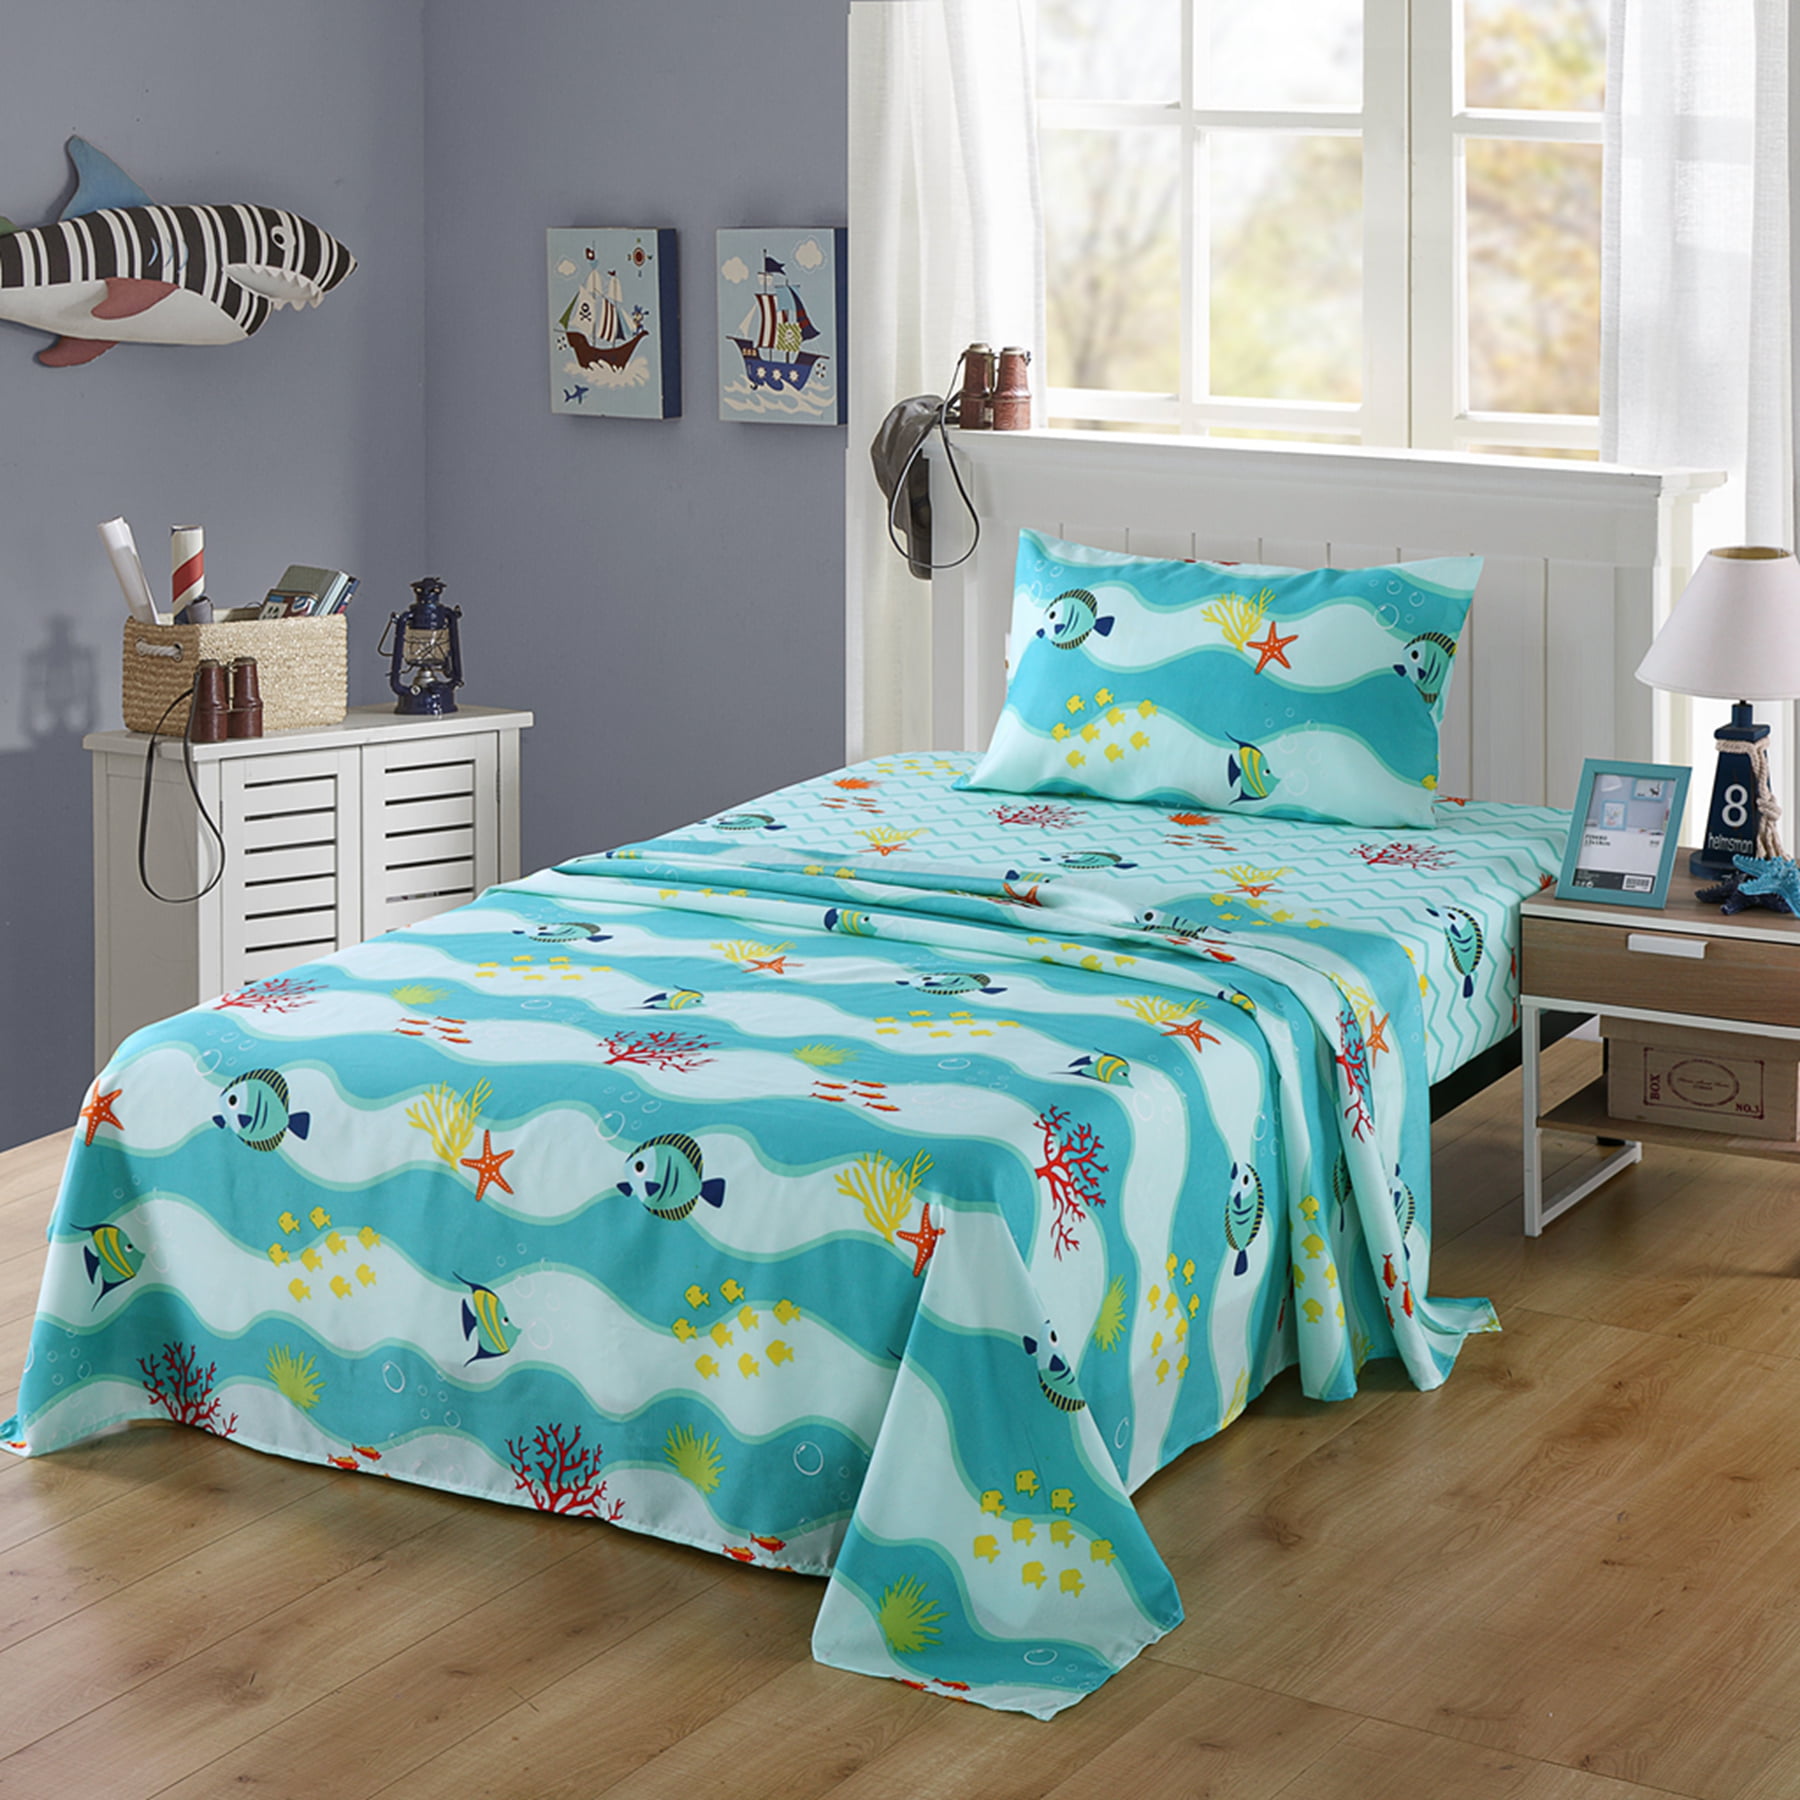 Kids Bedding Bunk Beds, Fitted Bunk Bed Comforter Sets